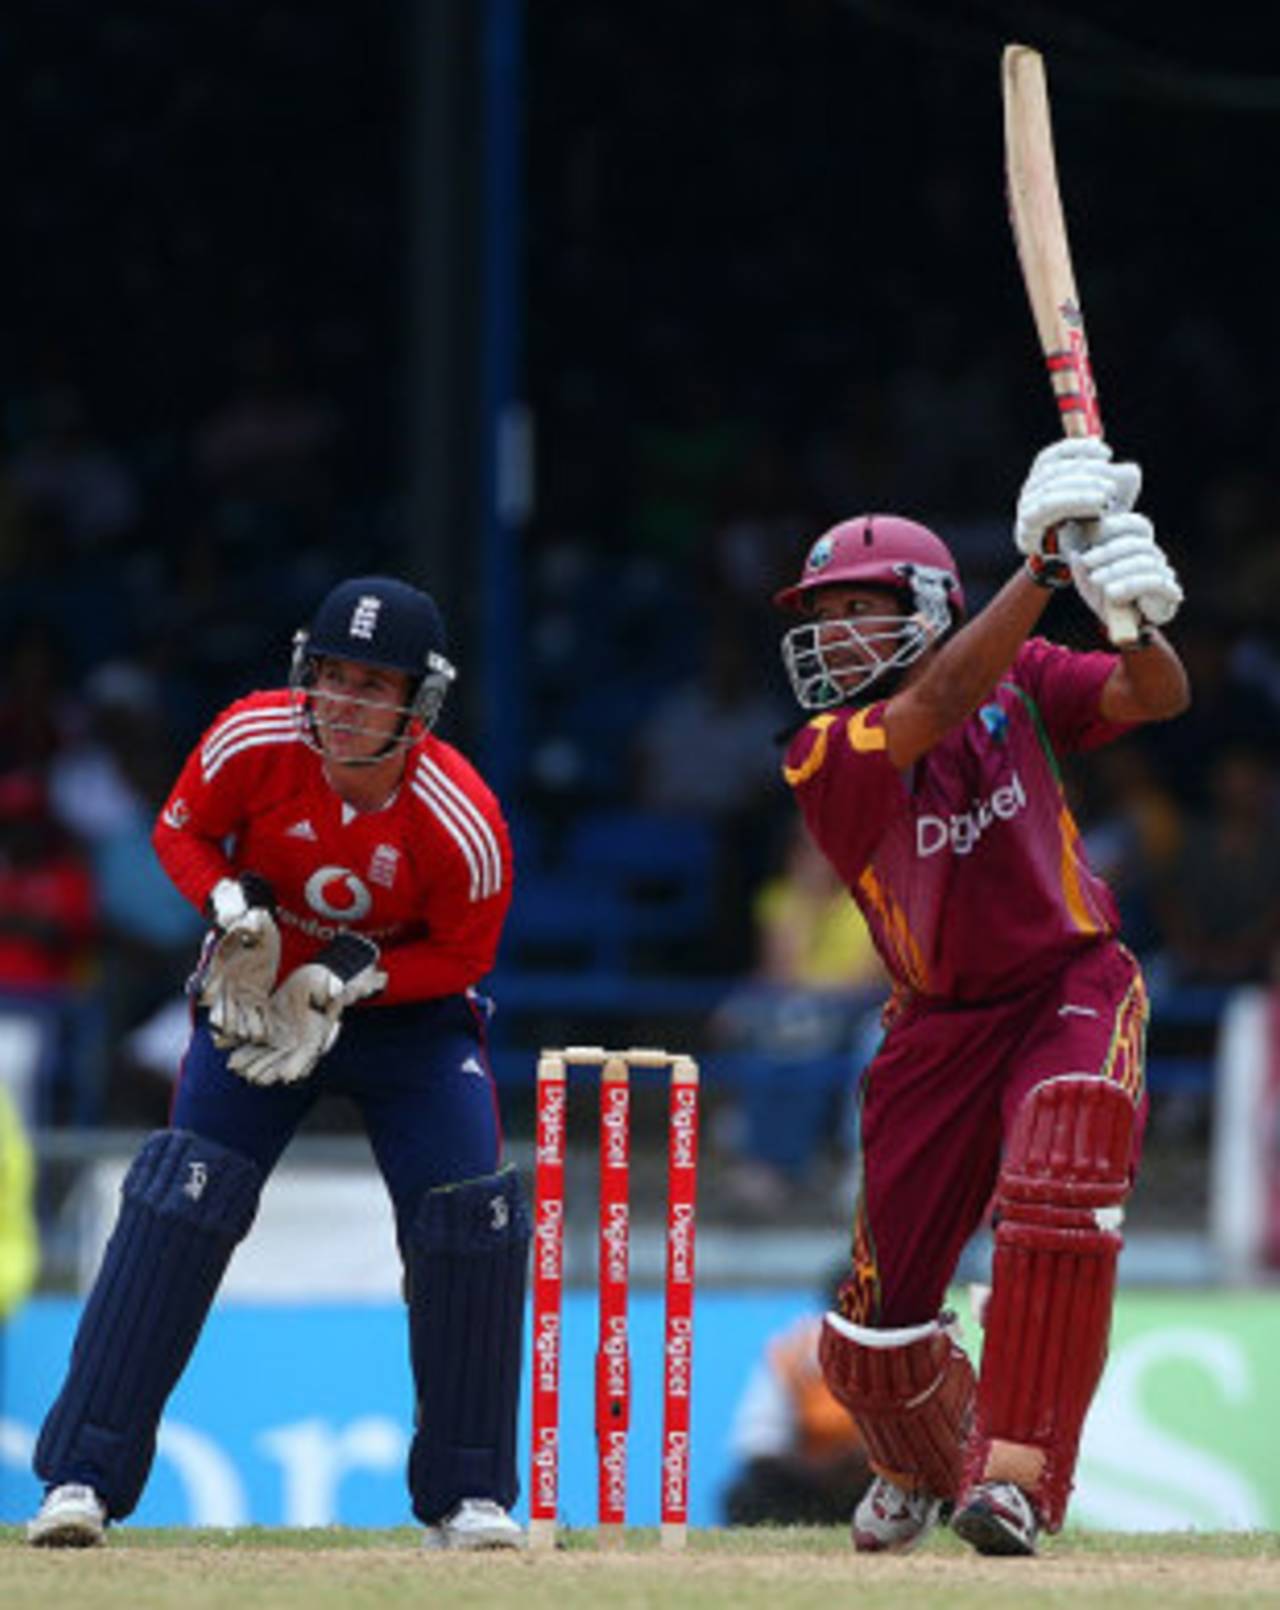 Ramnaresh Sarwan was the Man of the Match with 59 from 46 balls, West Indies v England, Twenty20 international, Trinidad, March 15, 2009